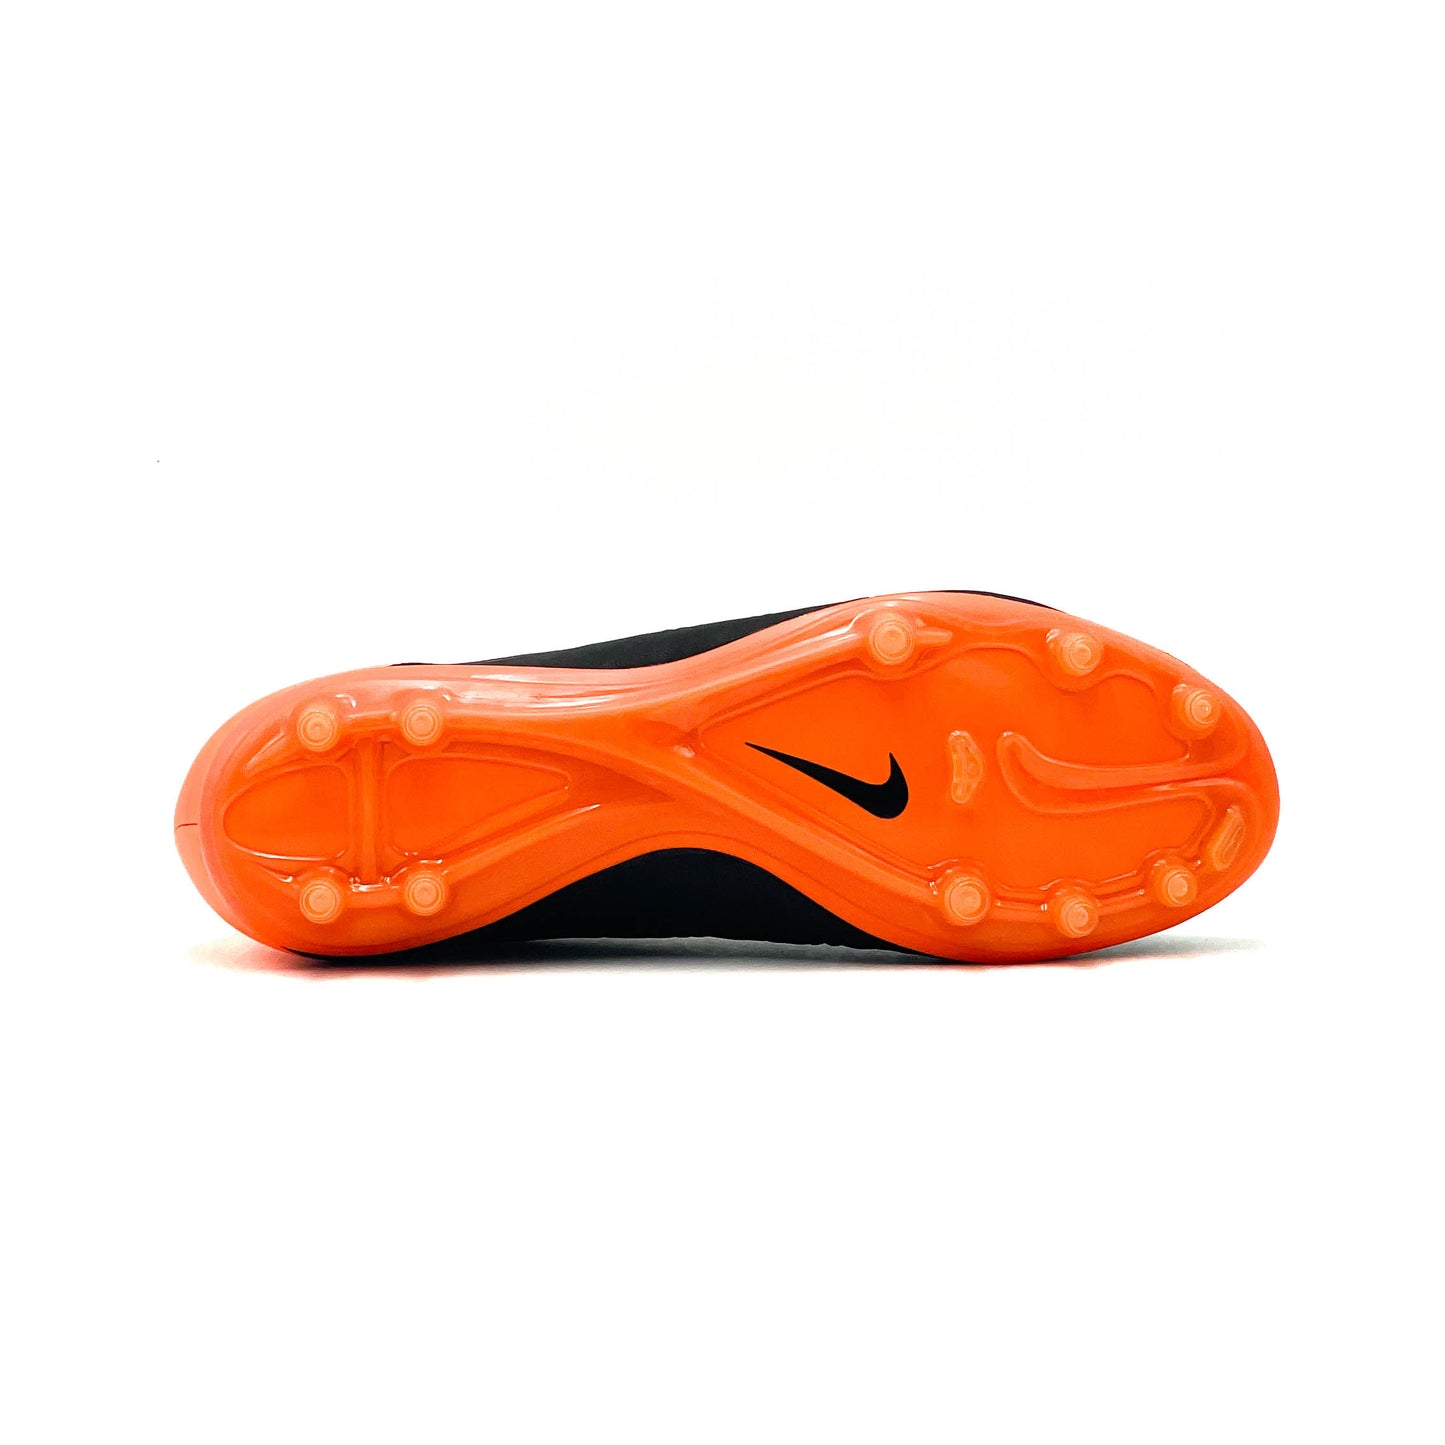 Nike Hypervenom Phinish Leather FG 759980-008